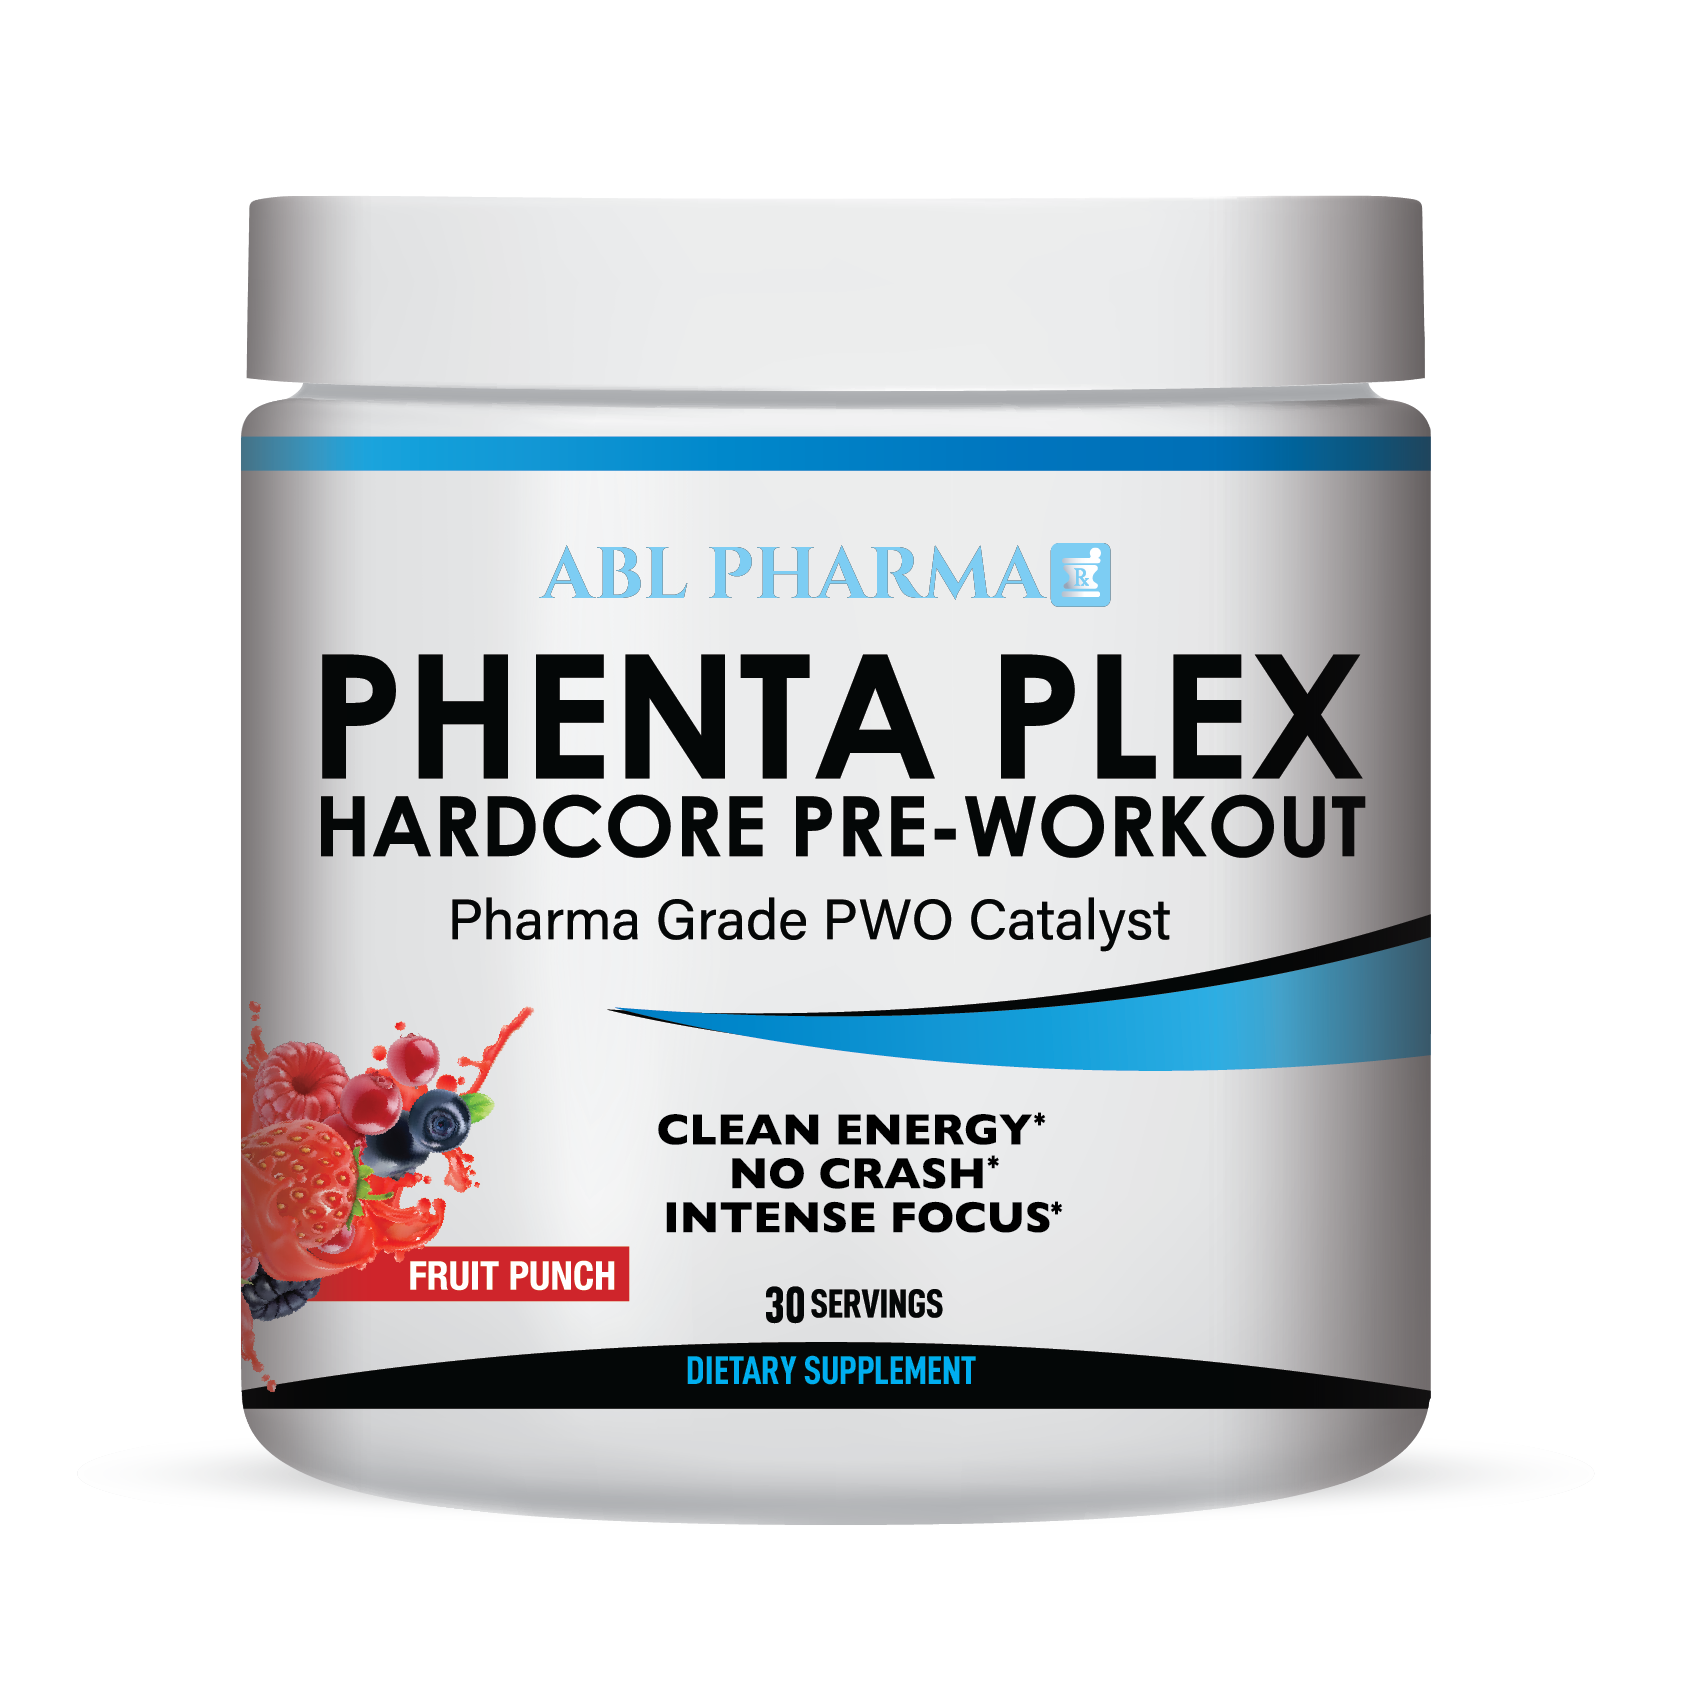 Phenta Plex - Pharma Grade PWO Catalyst